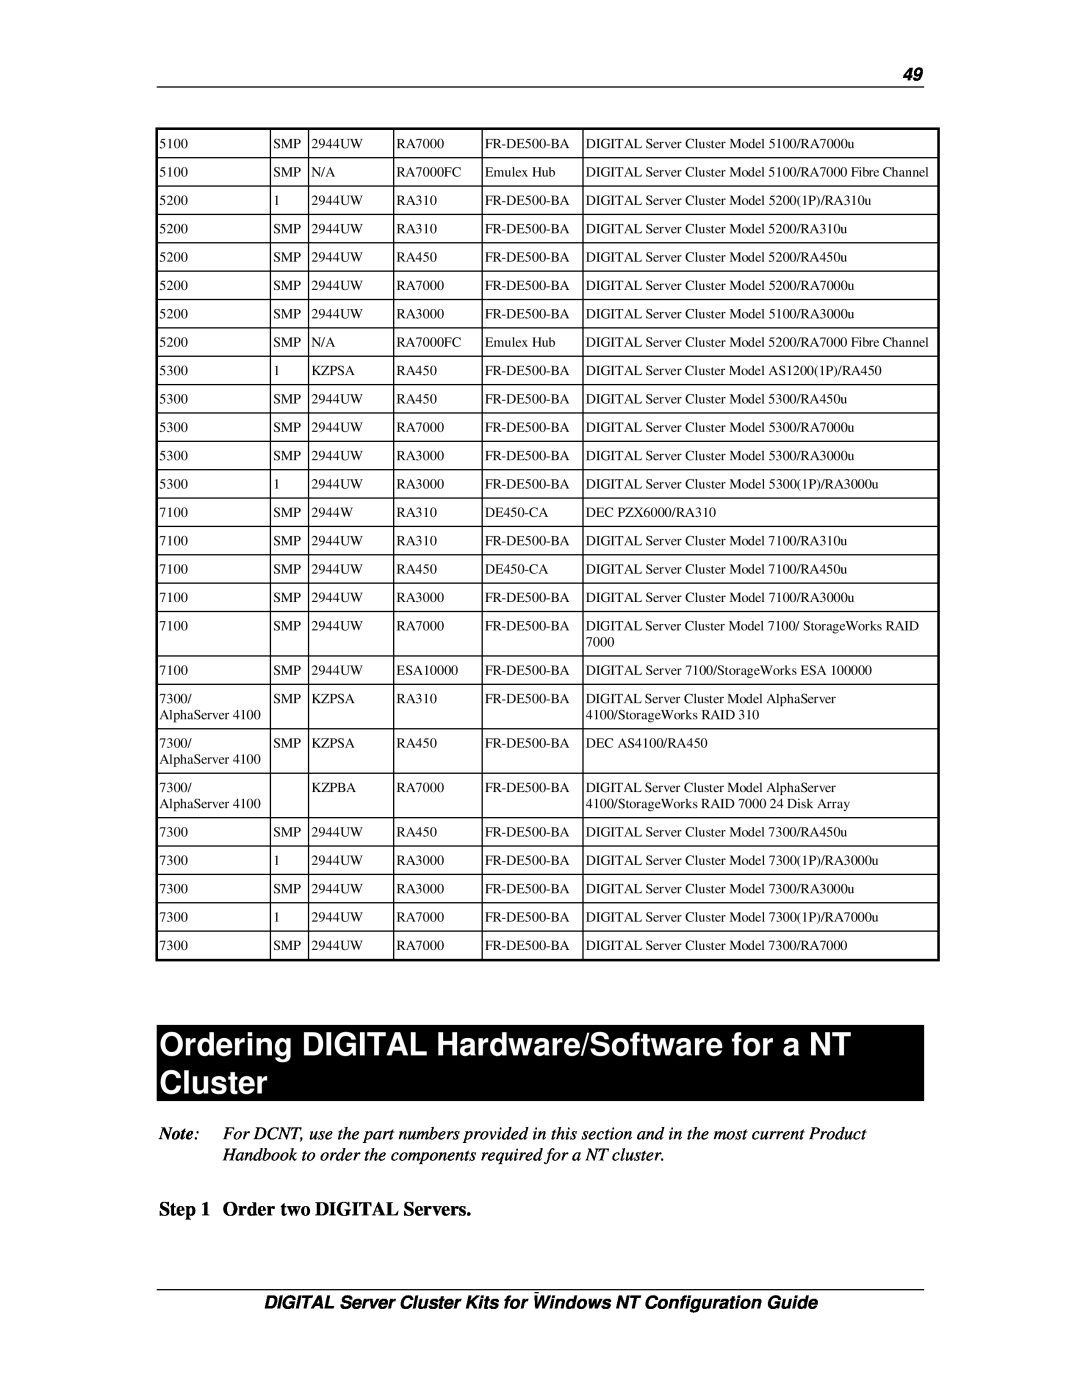 Compaq DIGITAL Server Cluster Kits for Windows NT manual Ordering DIGITAL Hardware/Software for a NT Cluster 